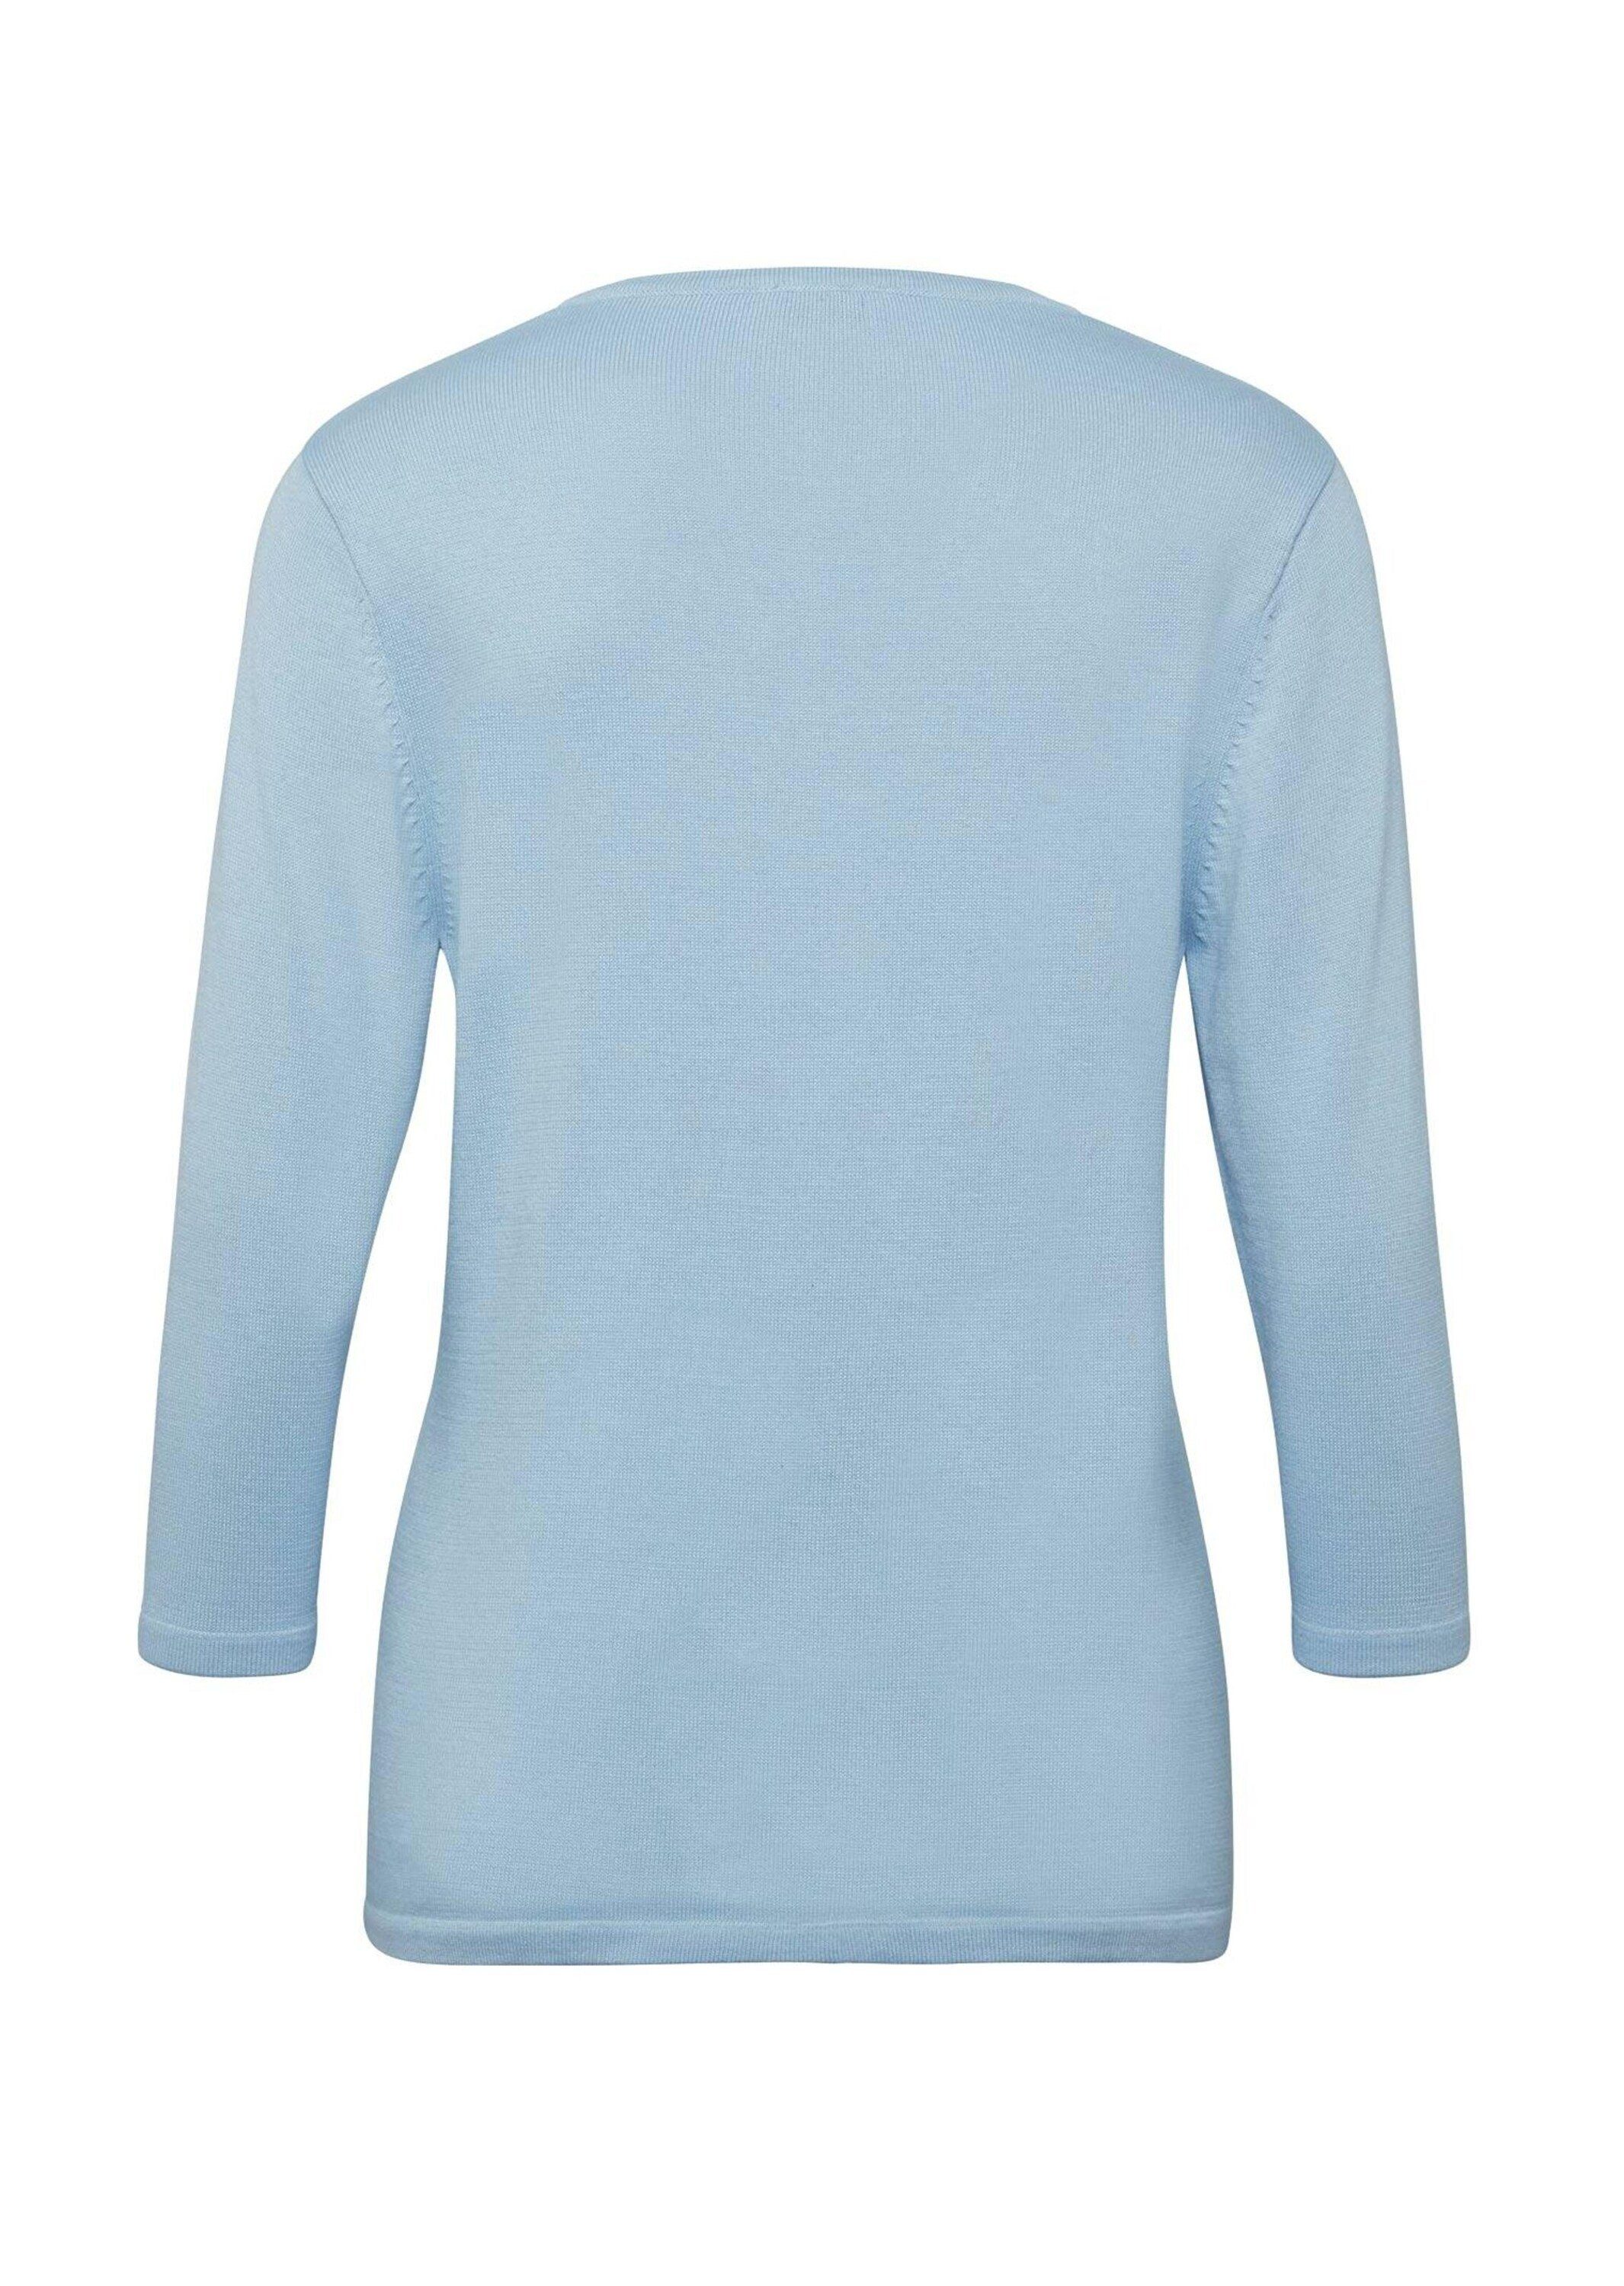 GOLDNER Strickpullover himmelblau in hochwertiger Qualität Pullover